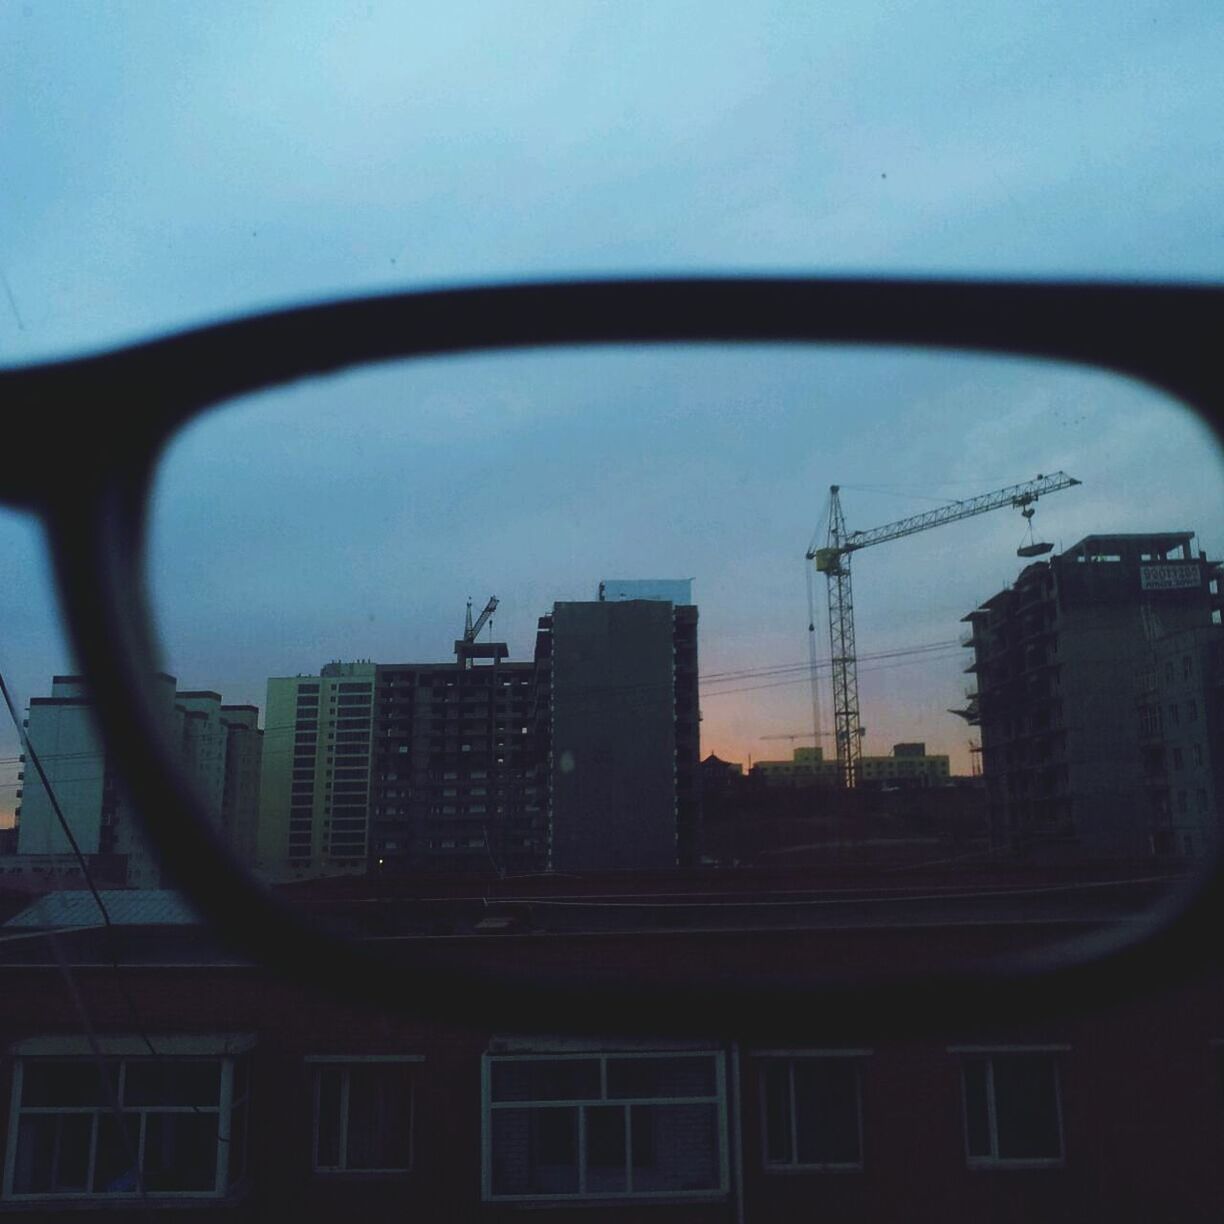 My window - My eyeclasses